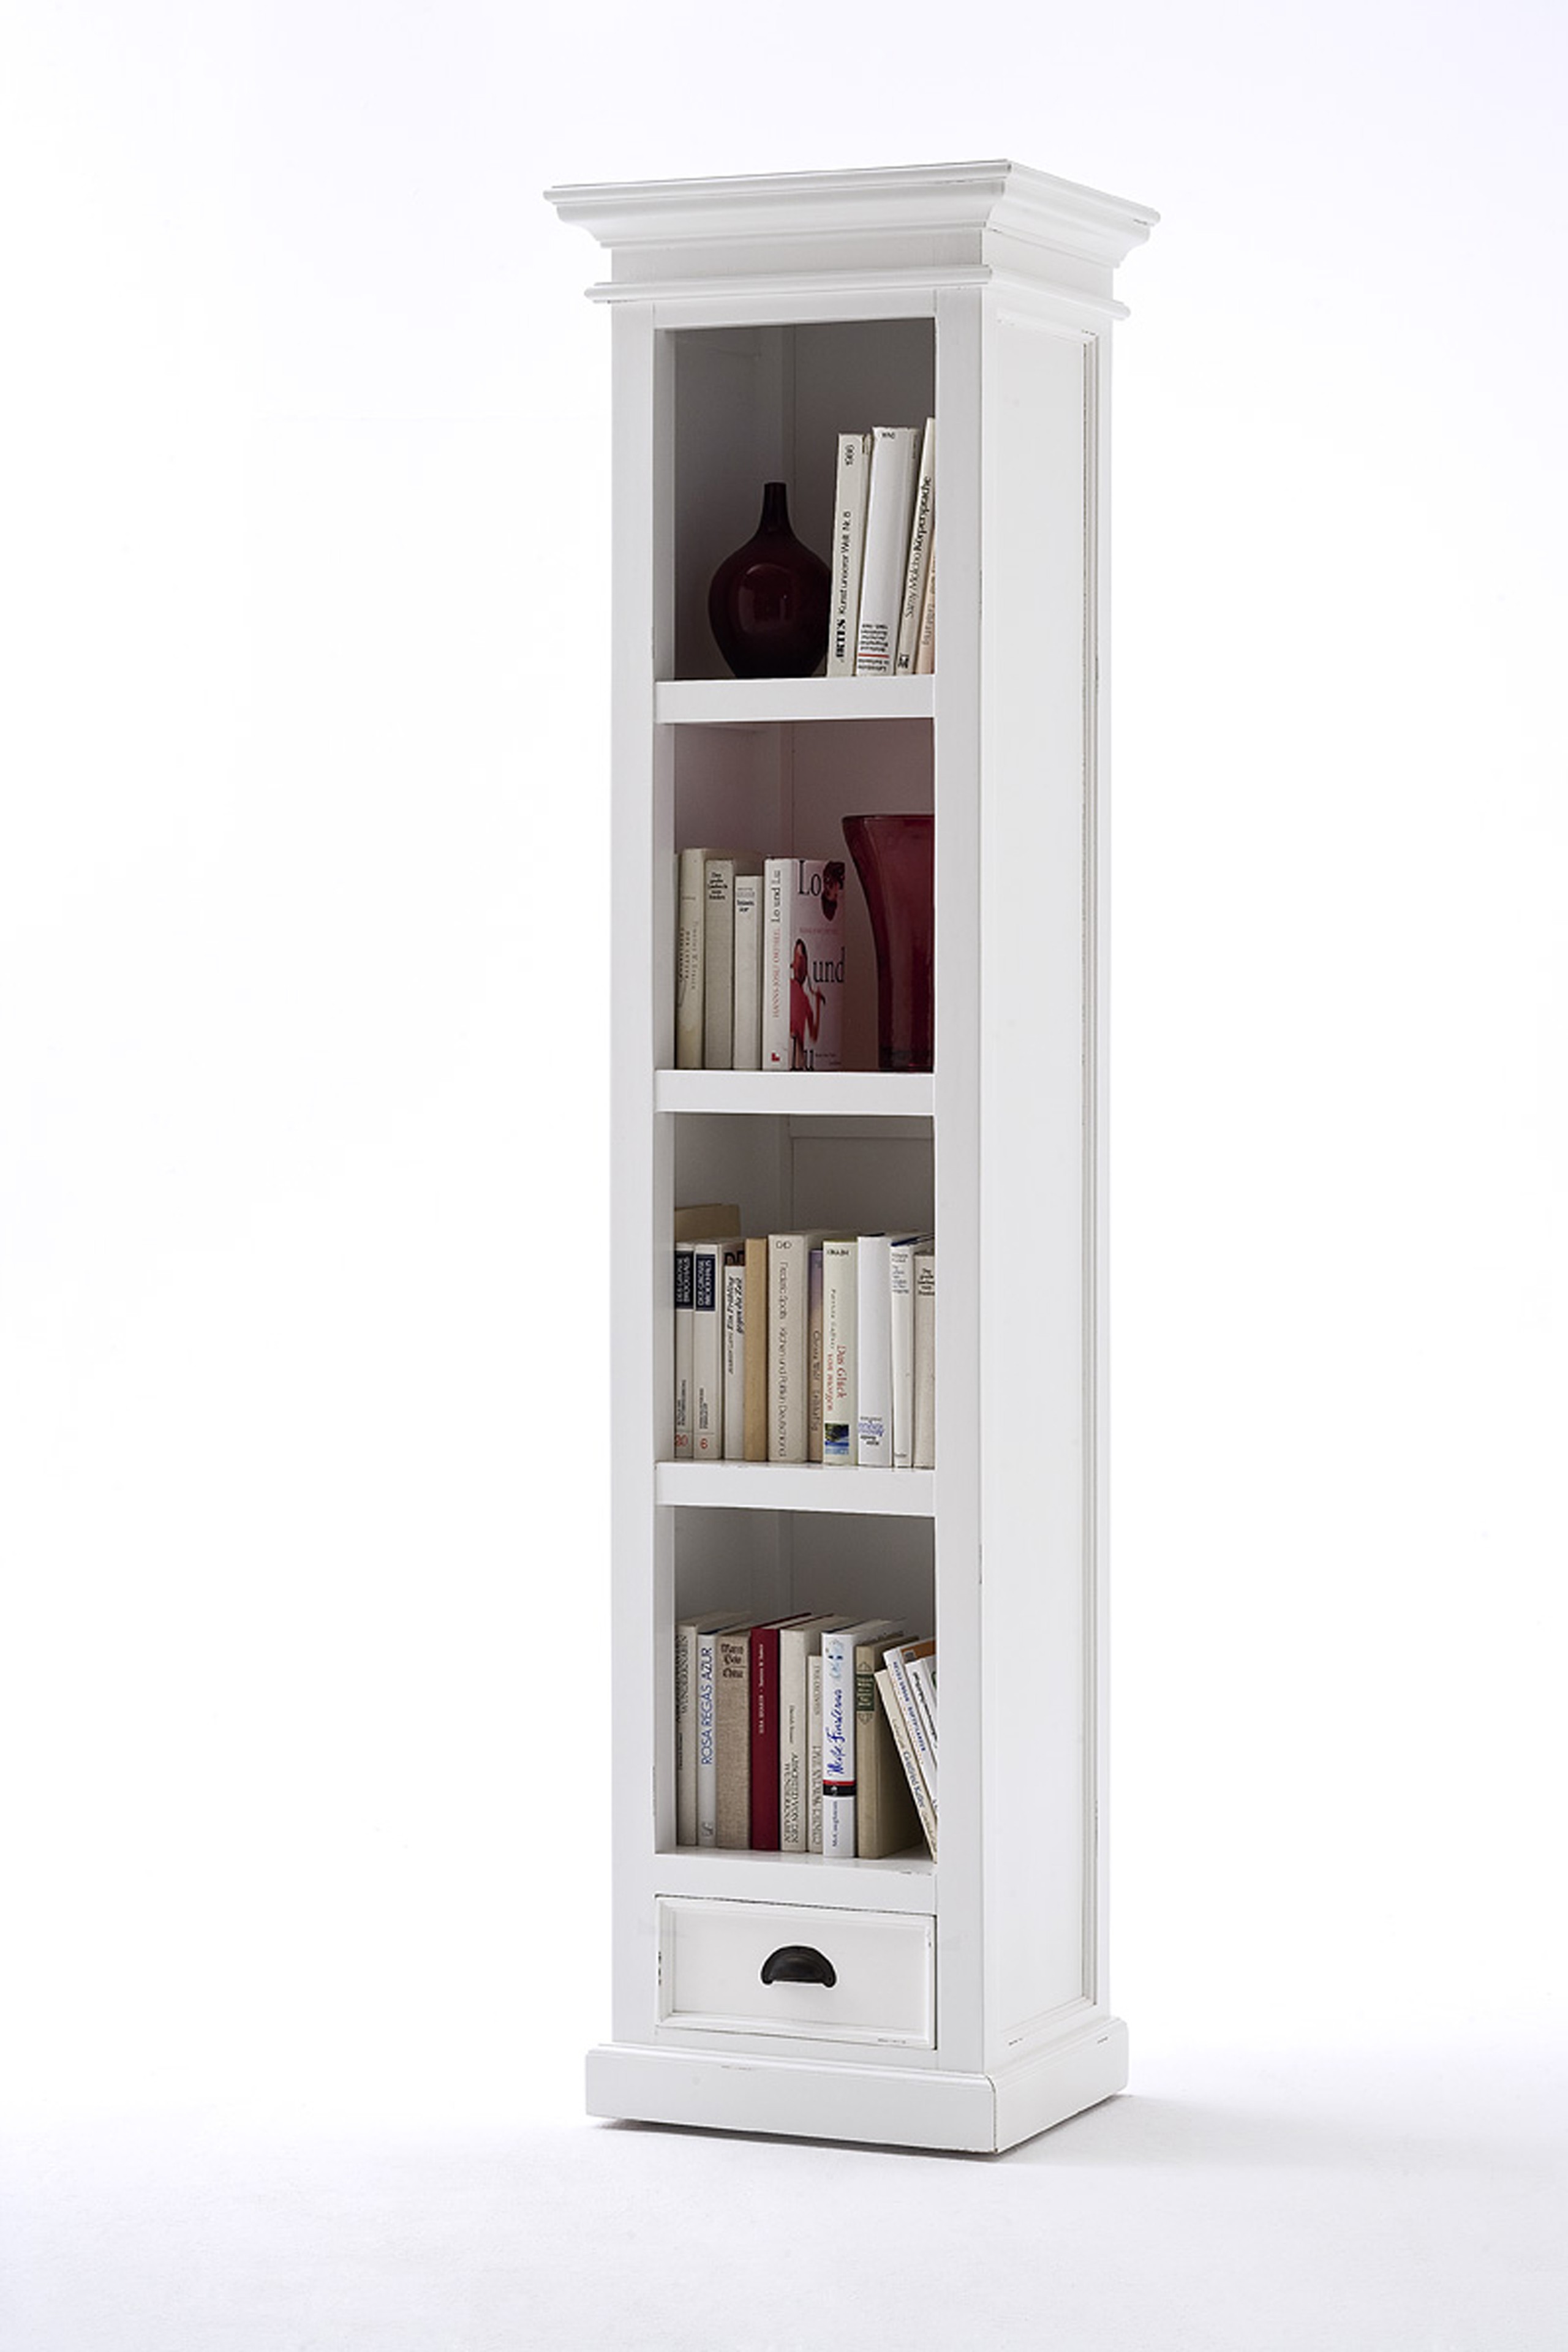 oak Furniture To Go Tall Narrow 3 Drawer Bookcase